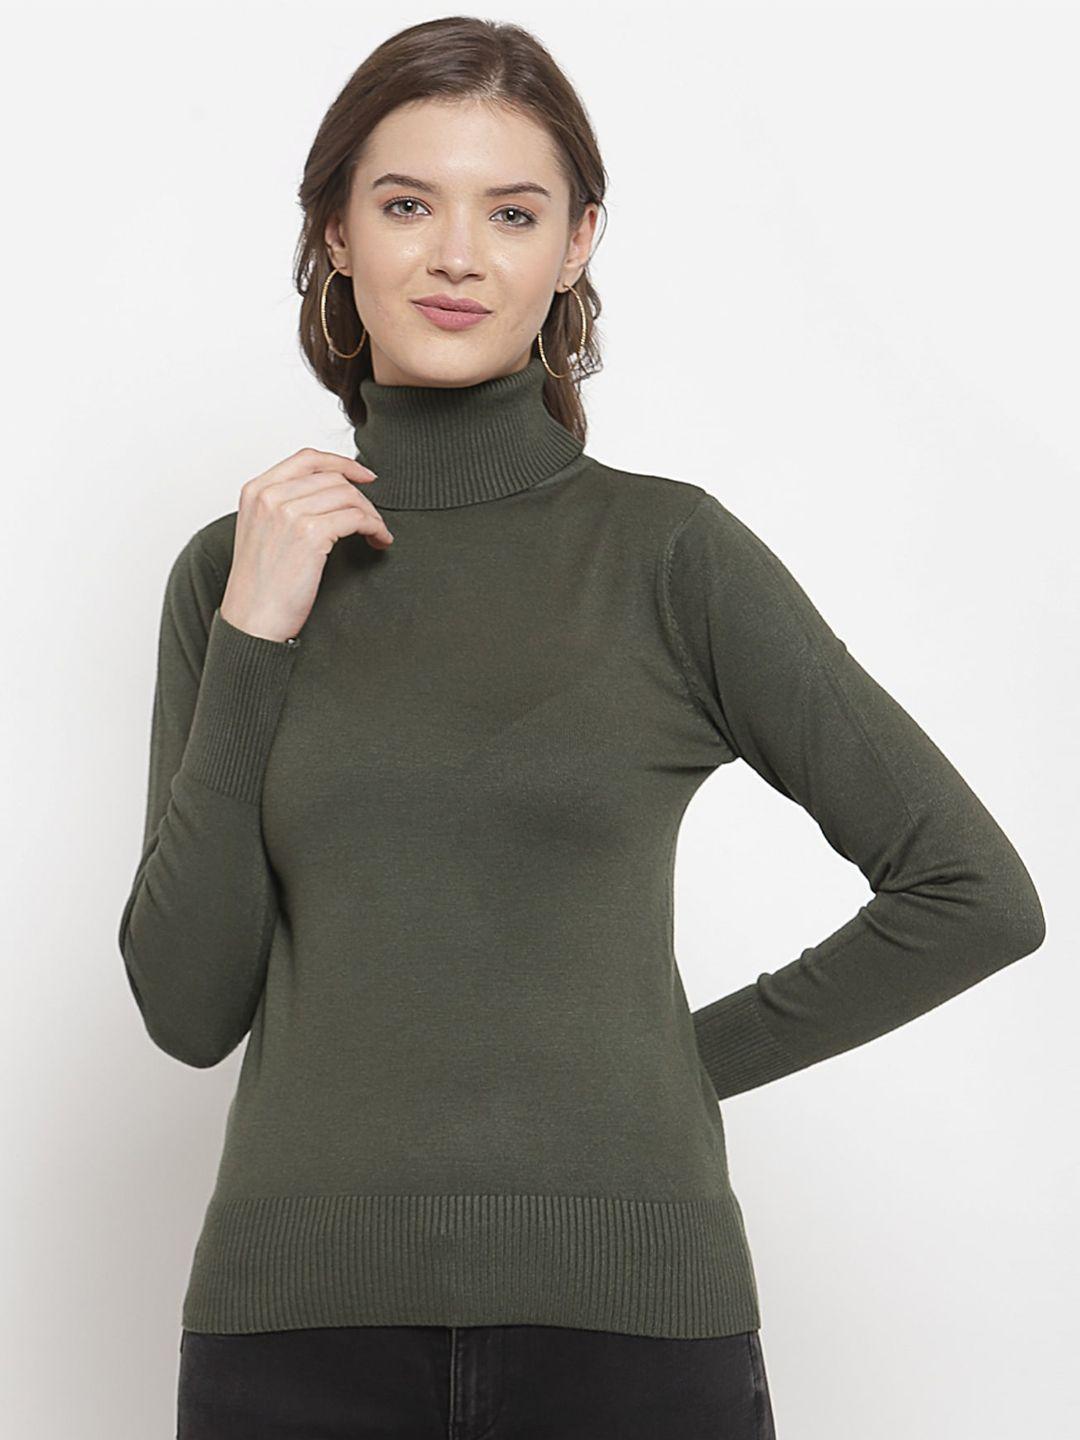 mafadeny women turtle neck pullover sweater